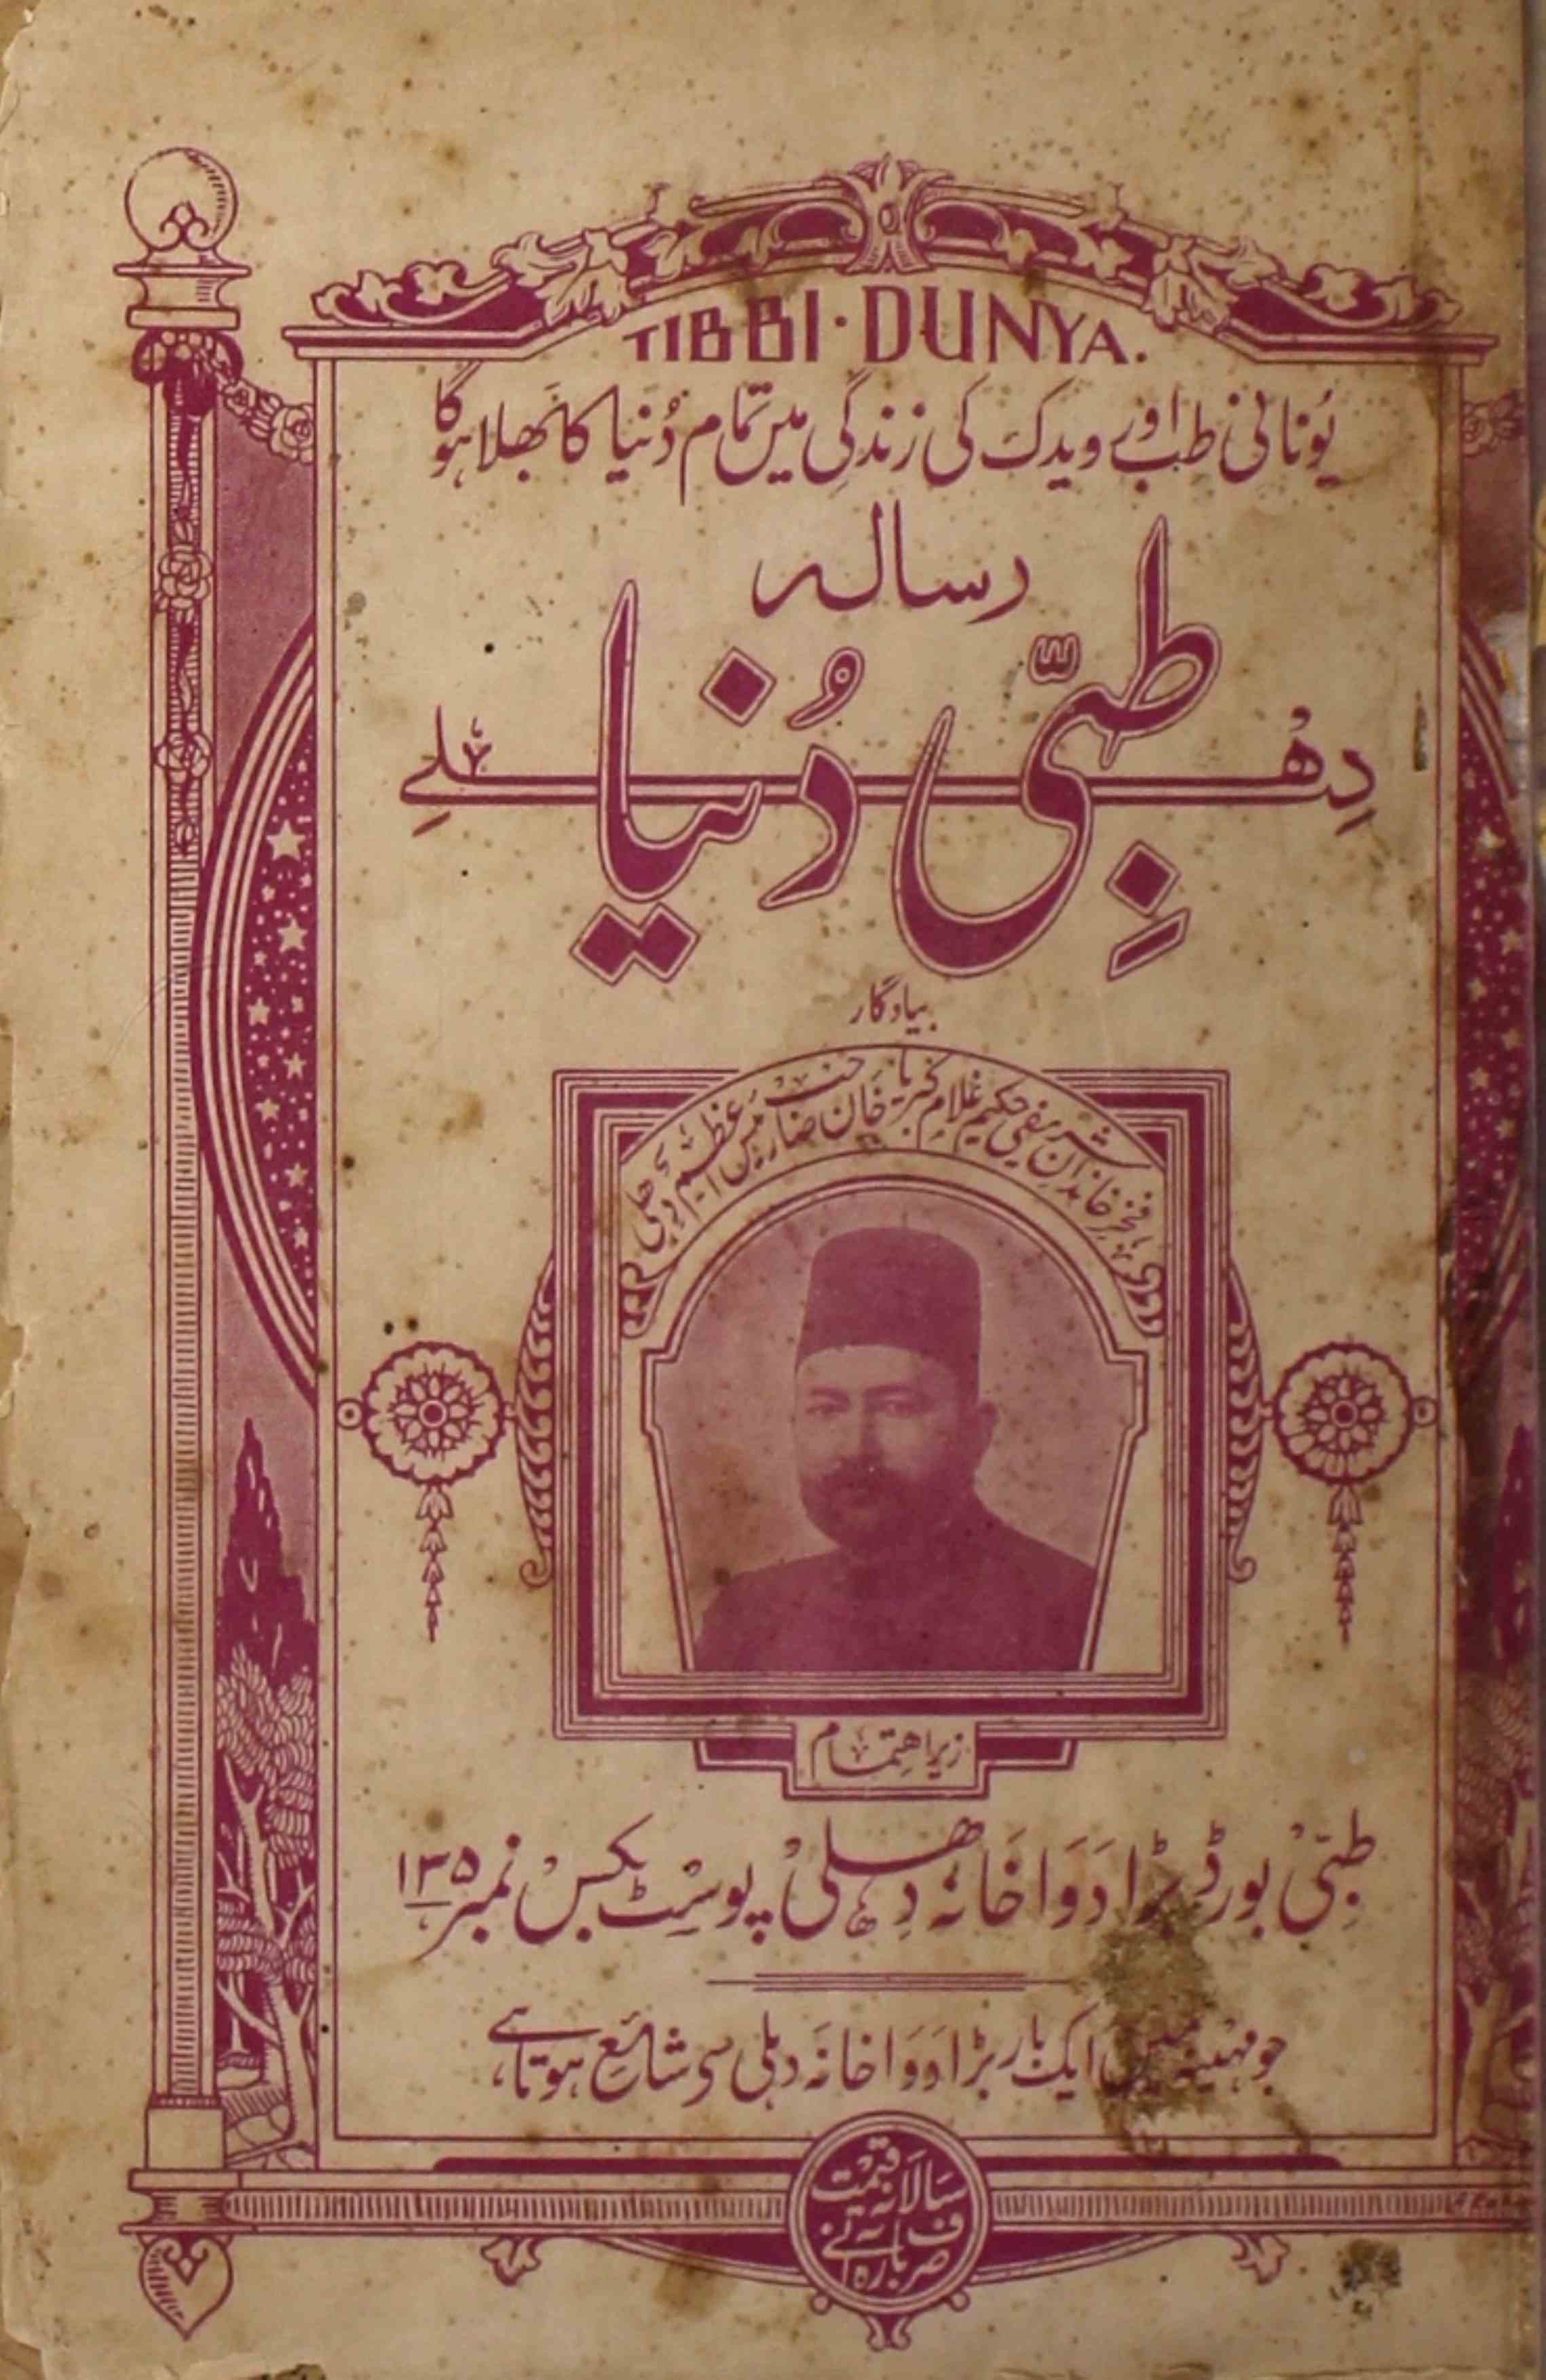 Tibbi Dunya Jild 3 No 1 August 1937-Svk-Shumara Number-001